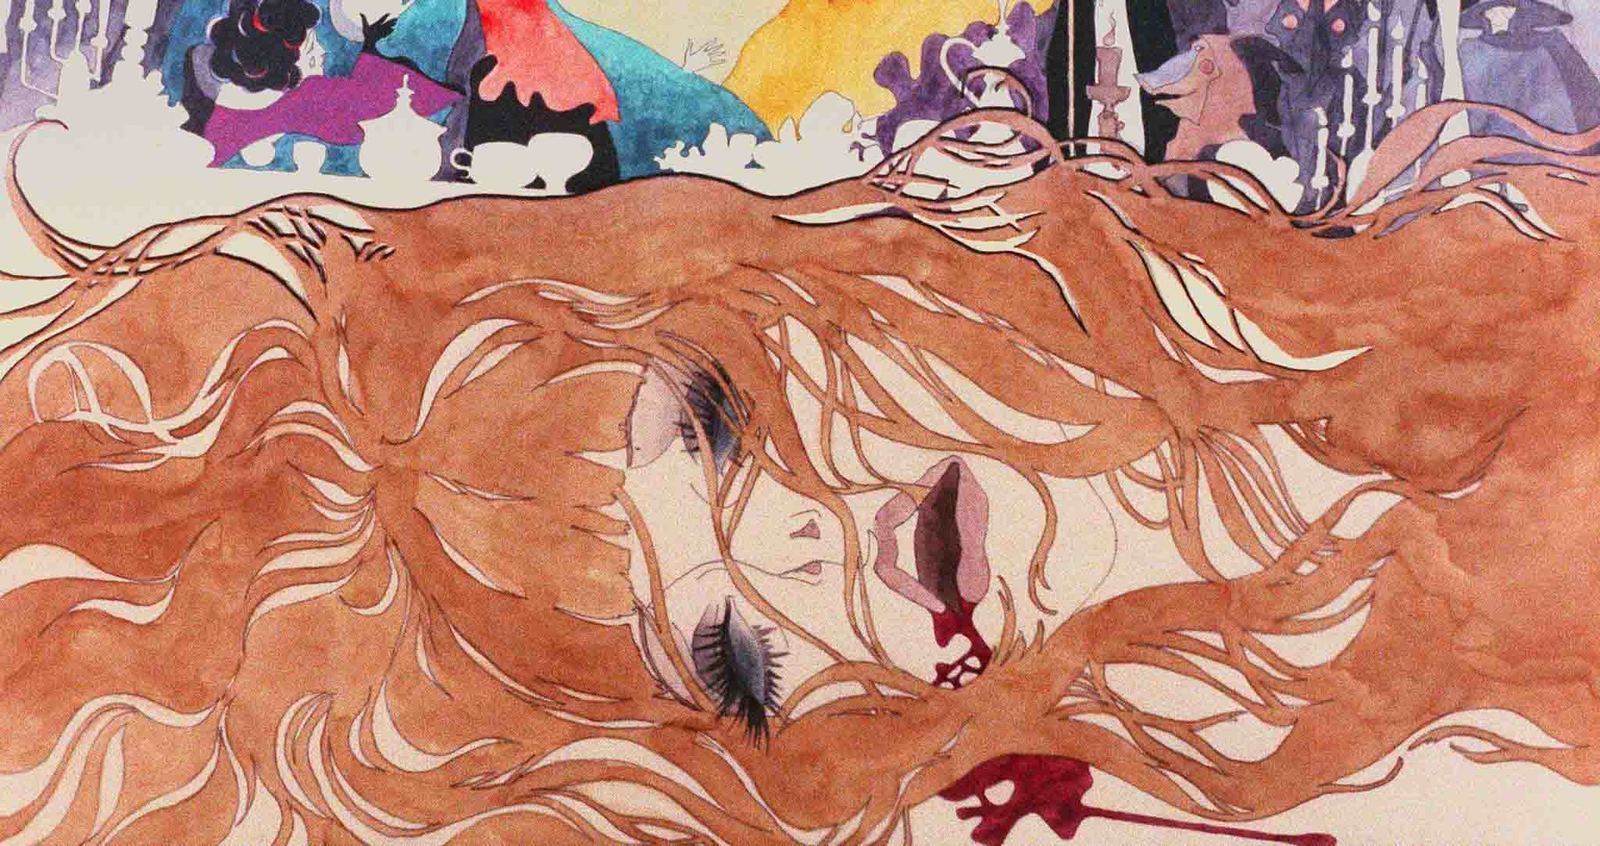 Belladonna of SadnessDirected by Eiichi Yamamoto. 89 min. Japan. 1973